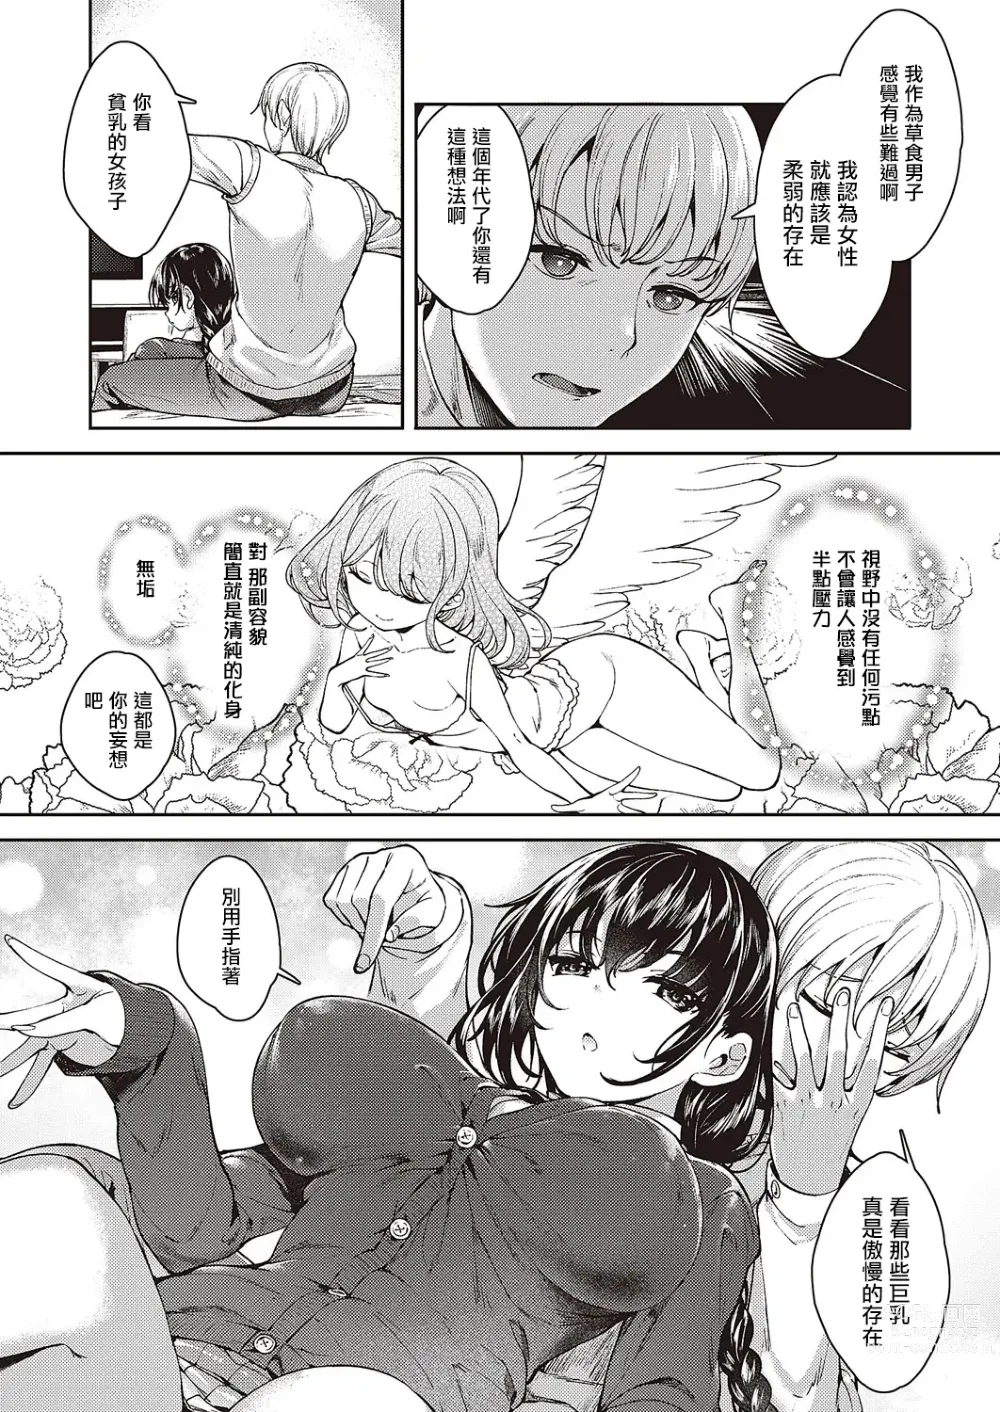 Page 5 of manga めぐりどころ 1歩